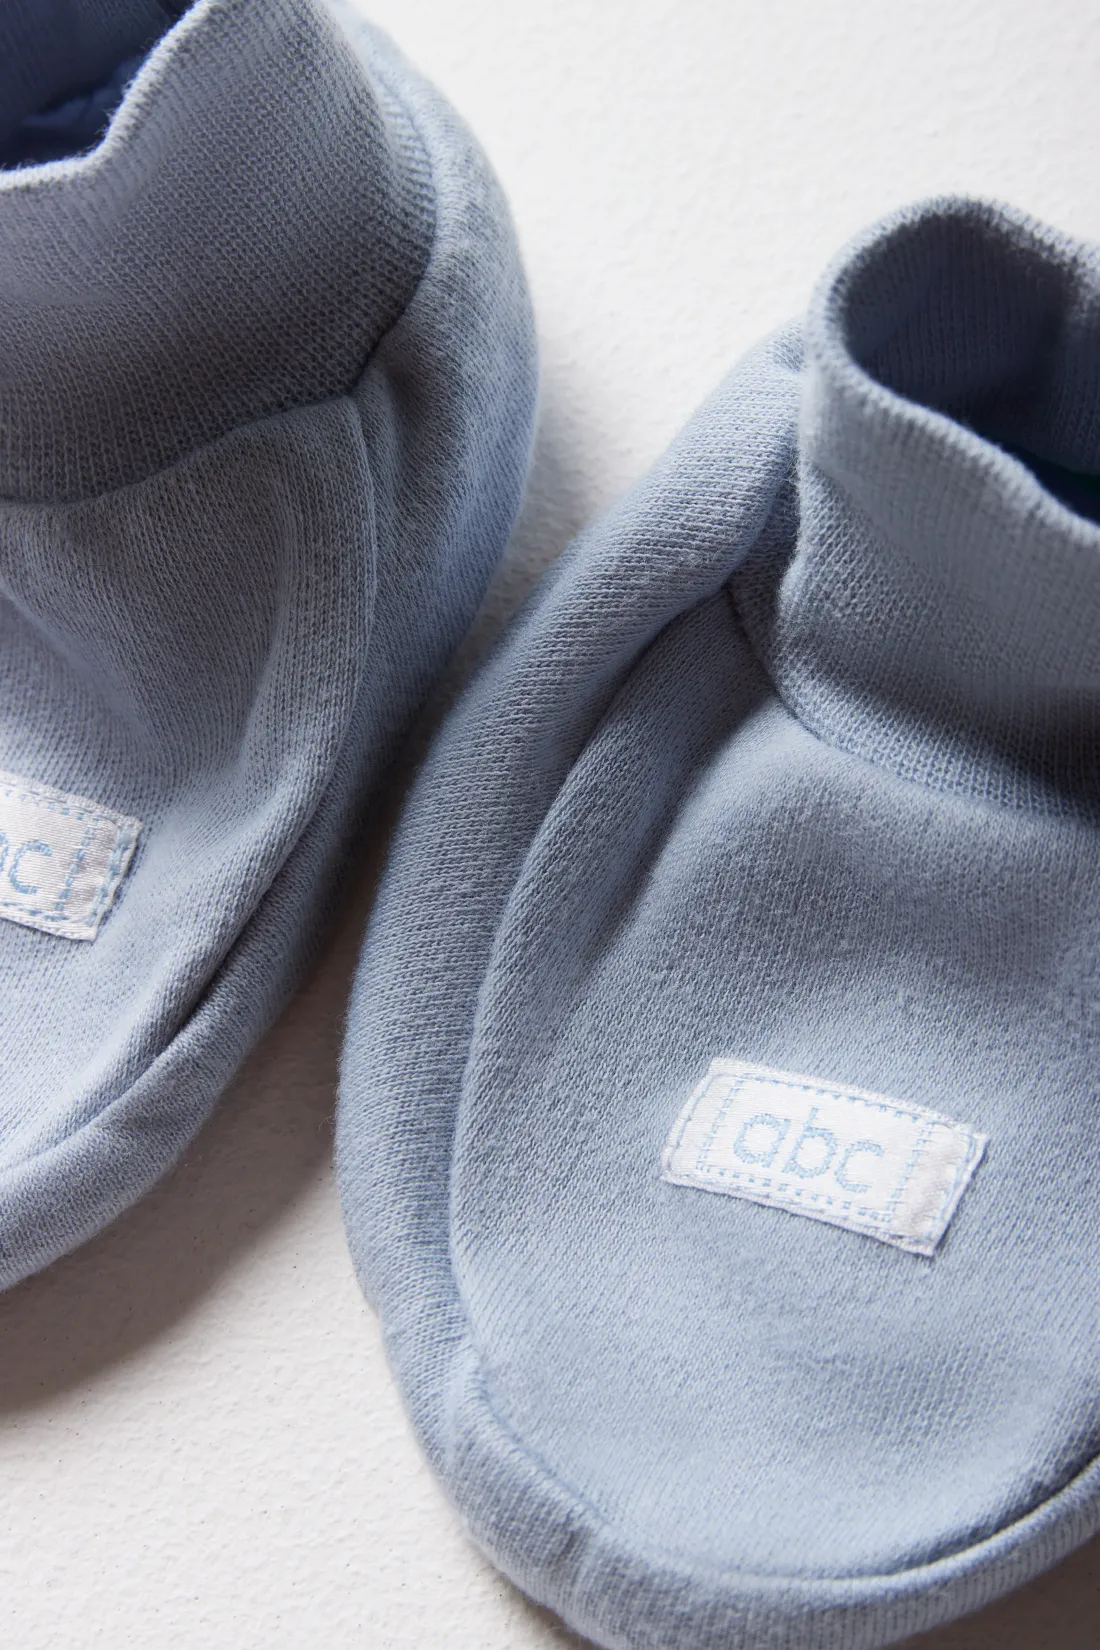 Boots blue - NEWBORN Baby Shoes | Ackermans